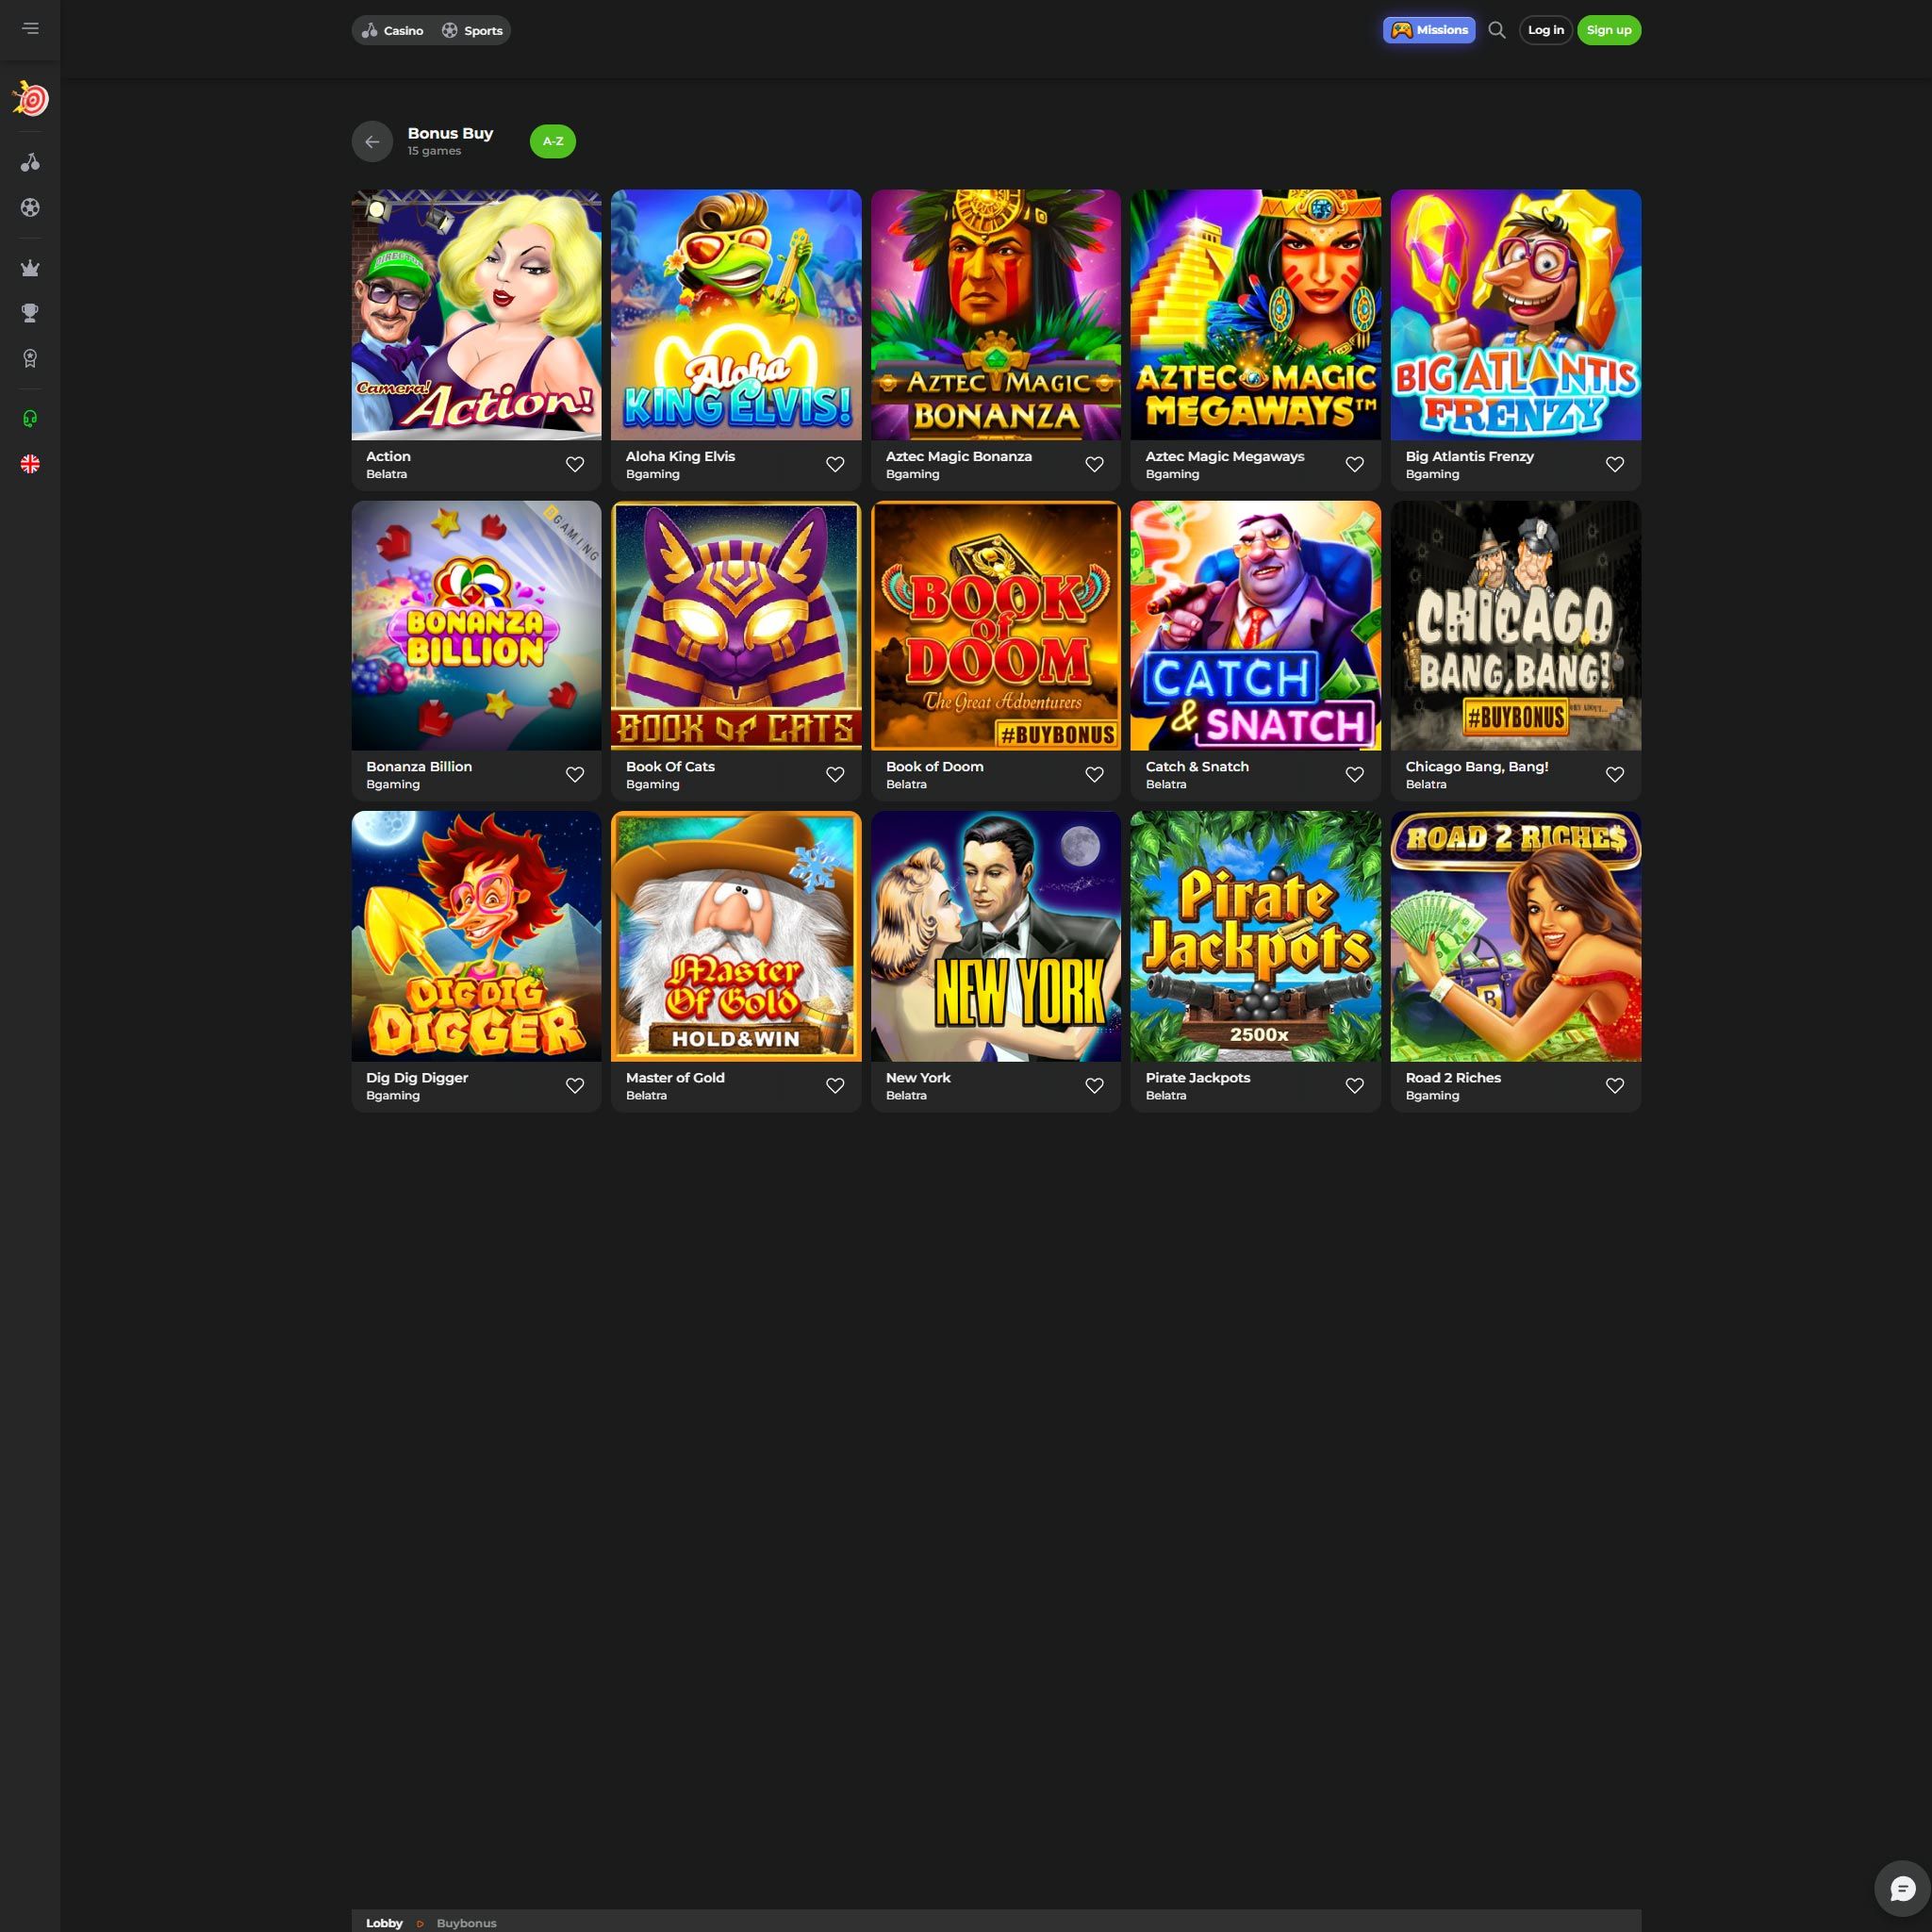 BetOnRed Casino full games catalogue